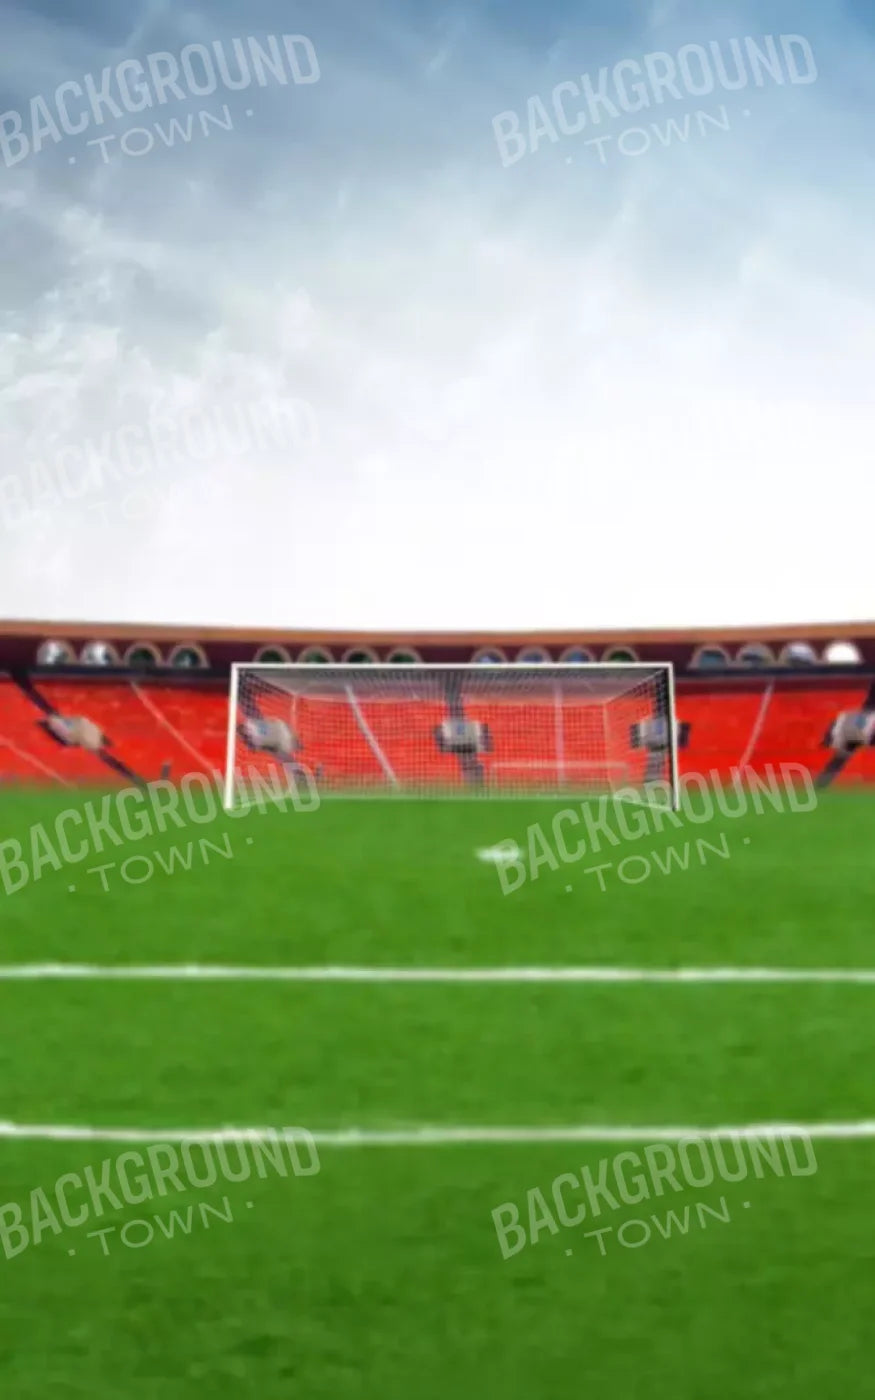 Soccer Stadium 9’X14’ Ultracloth (108 X 168 Inch) Backdrop